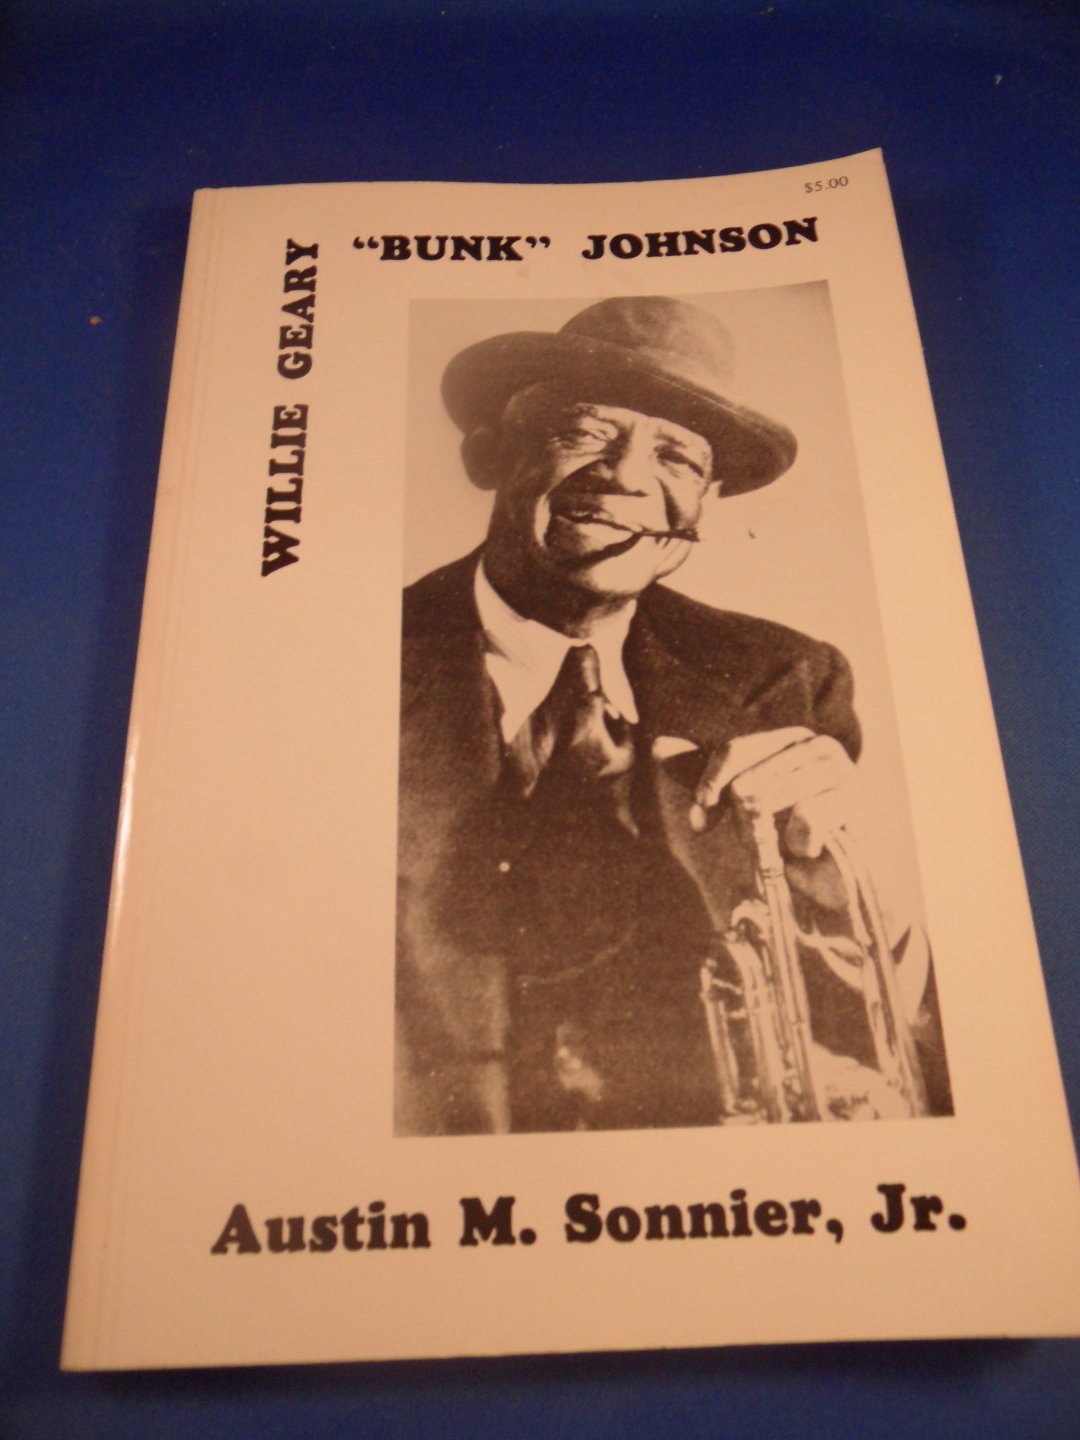 Sonnier Jr.: Austin M - Willie Geary "Bunk"Johnson